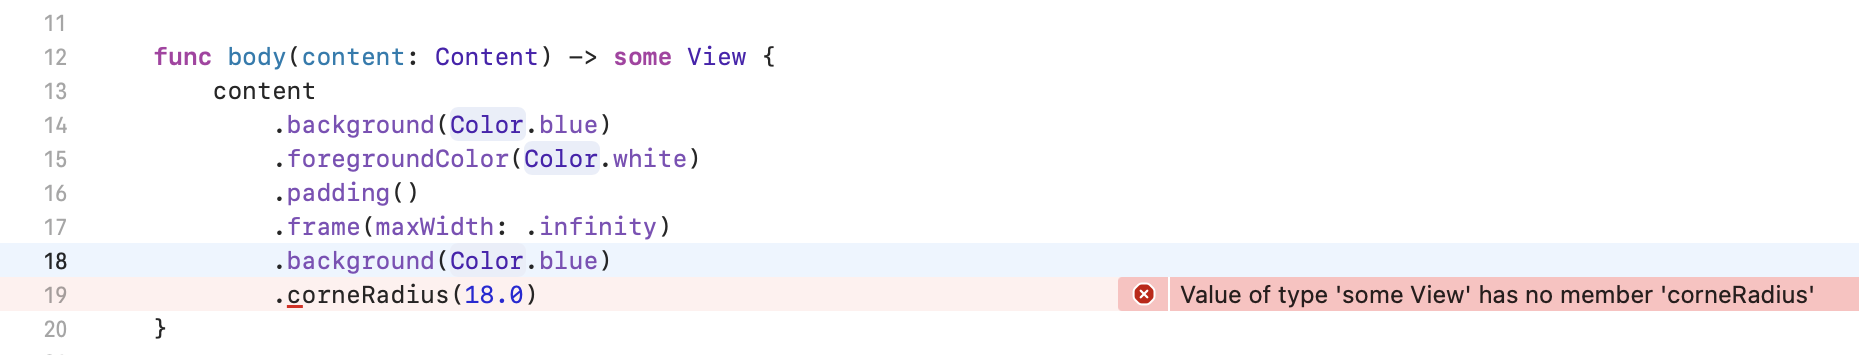 xcode mistake code